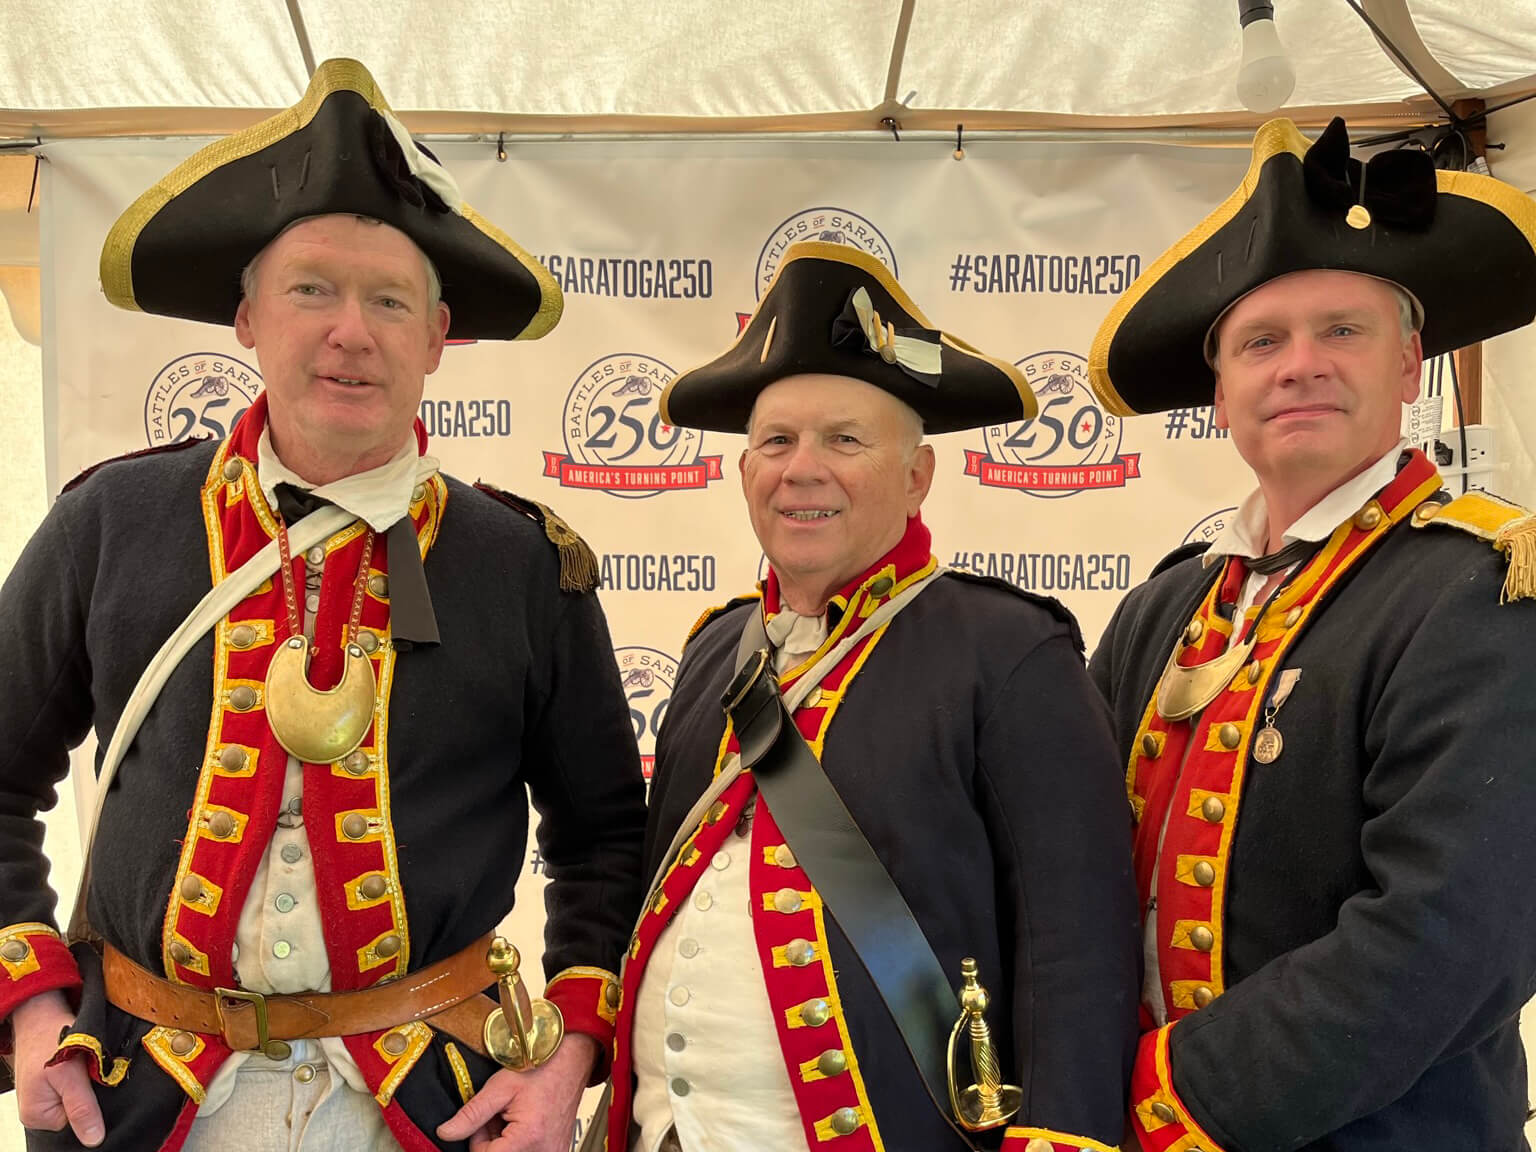 Three men dressed as Revolutionary War soldiers